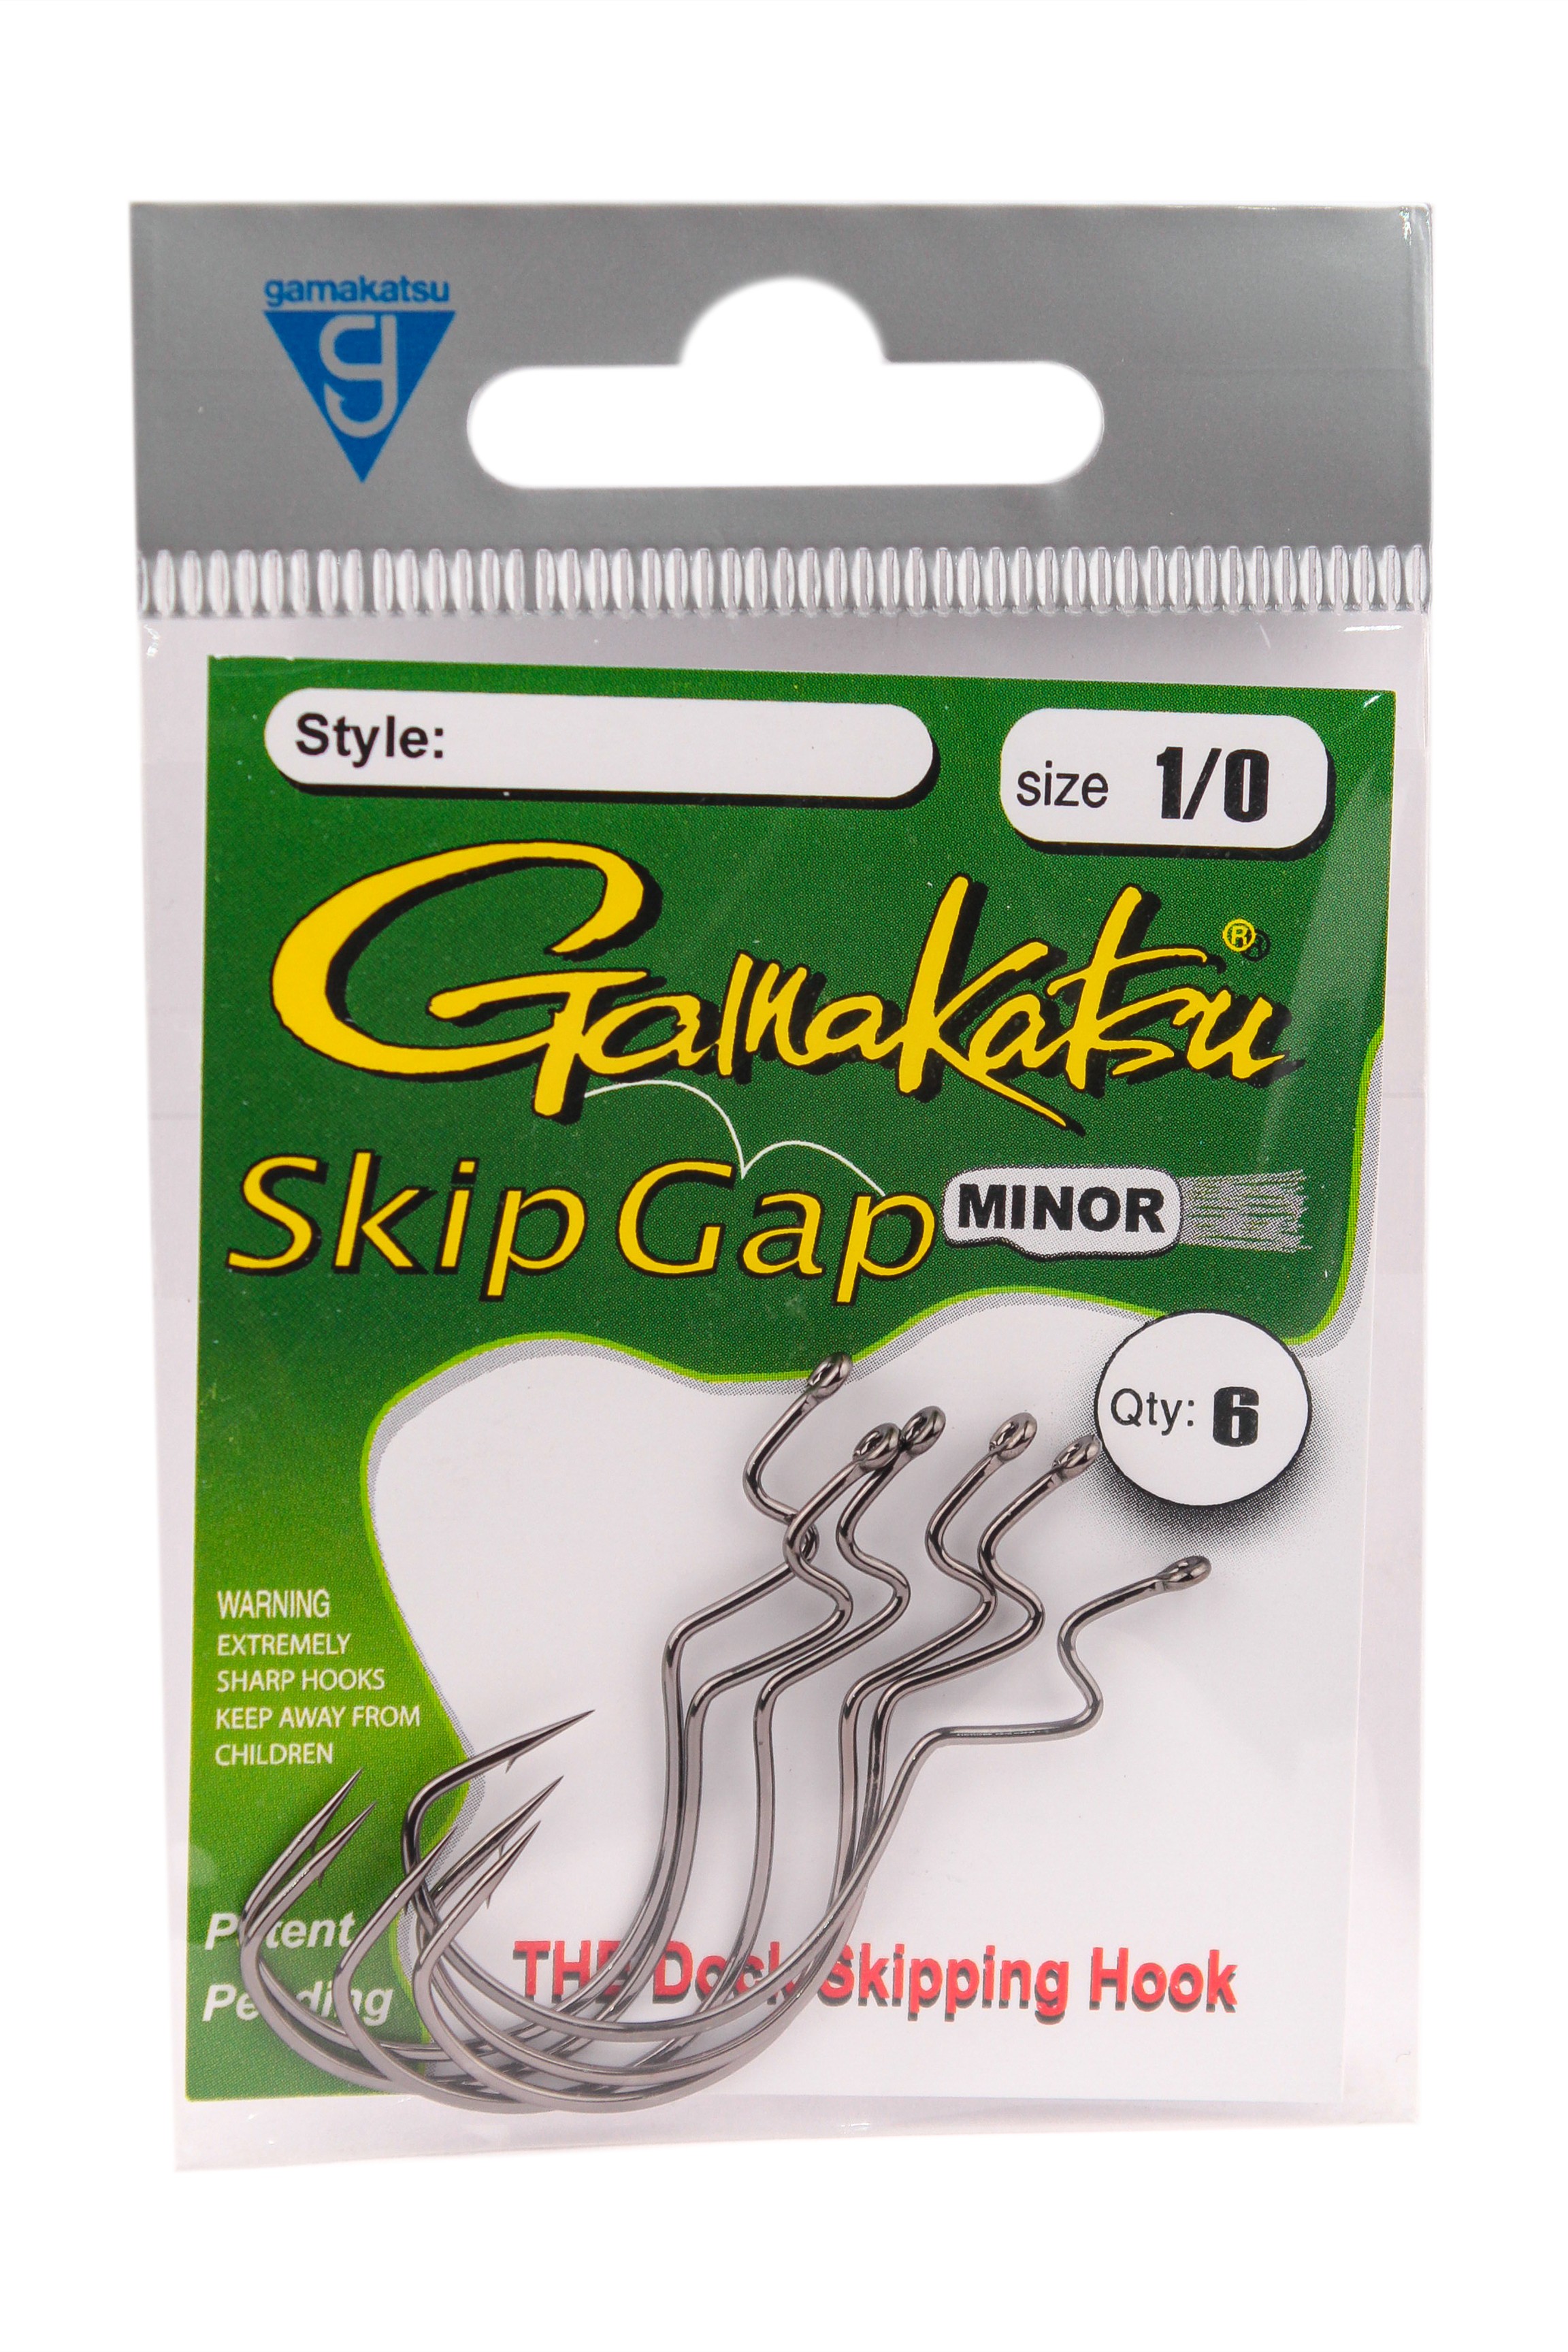 Крючок Gamakatsu офсетный Skip gape minor №1/0 - фото 1